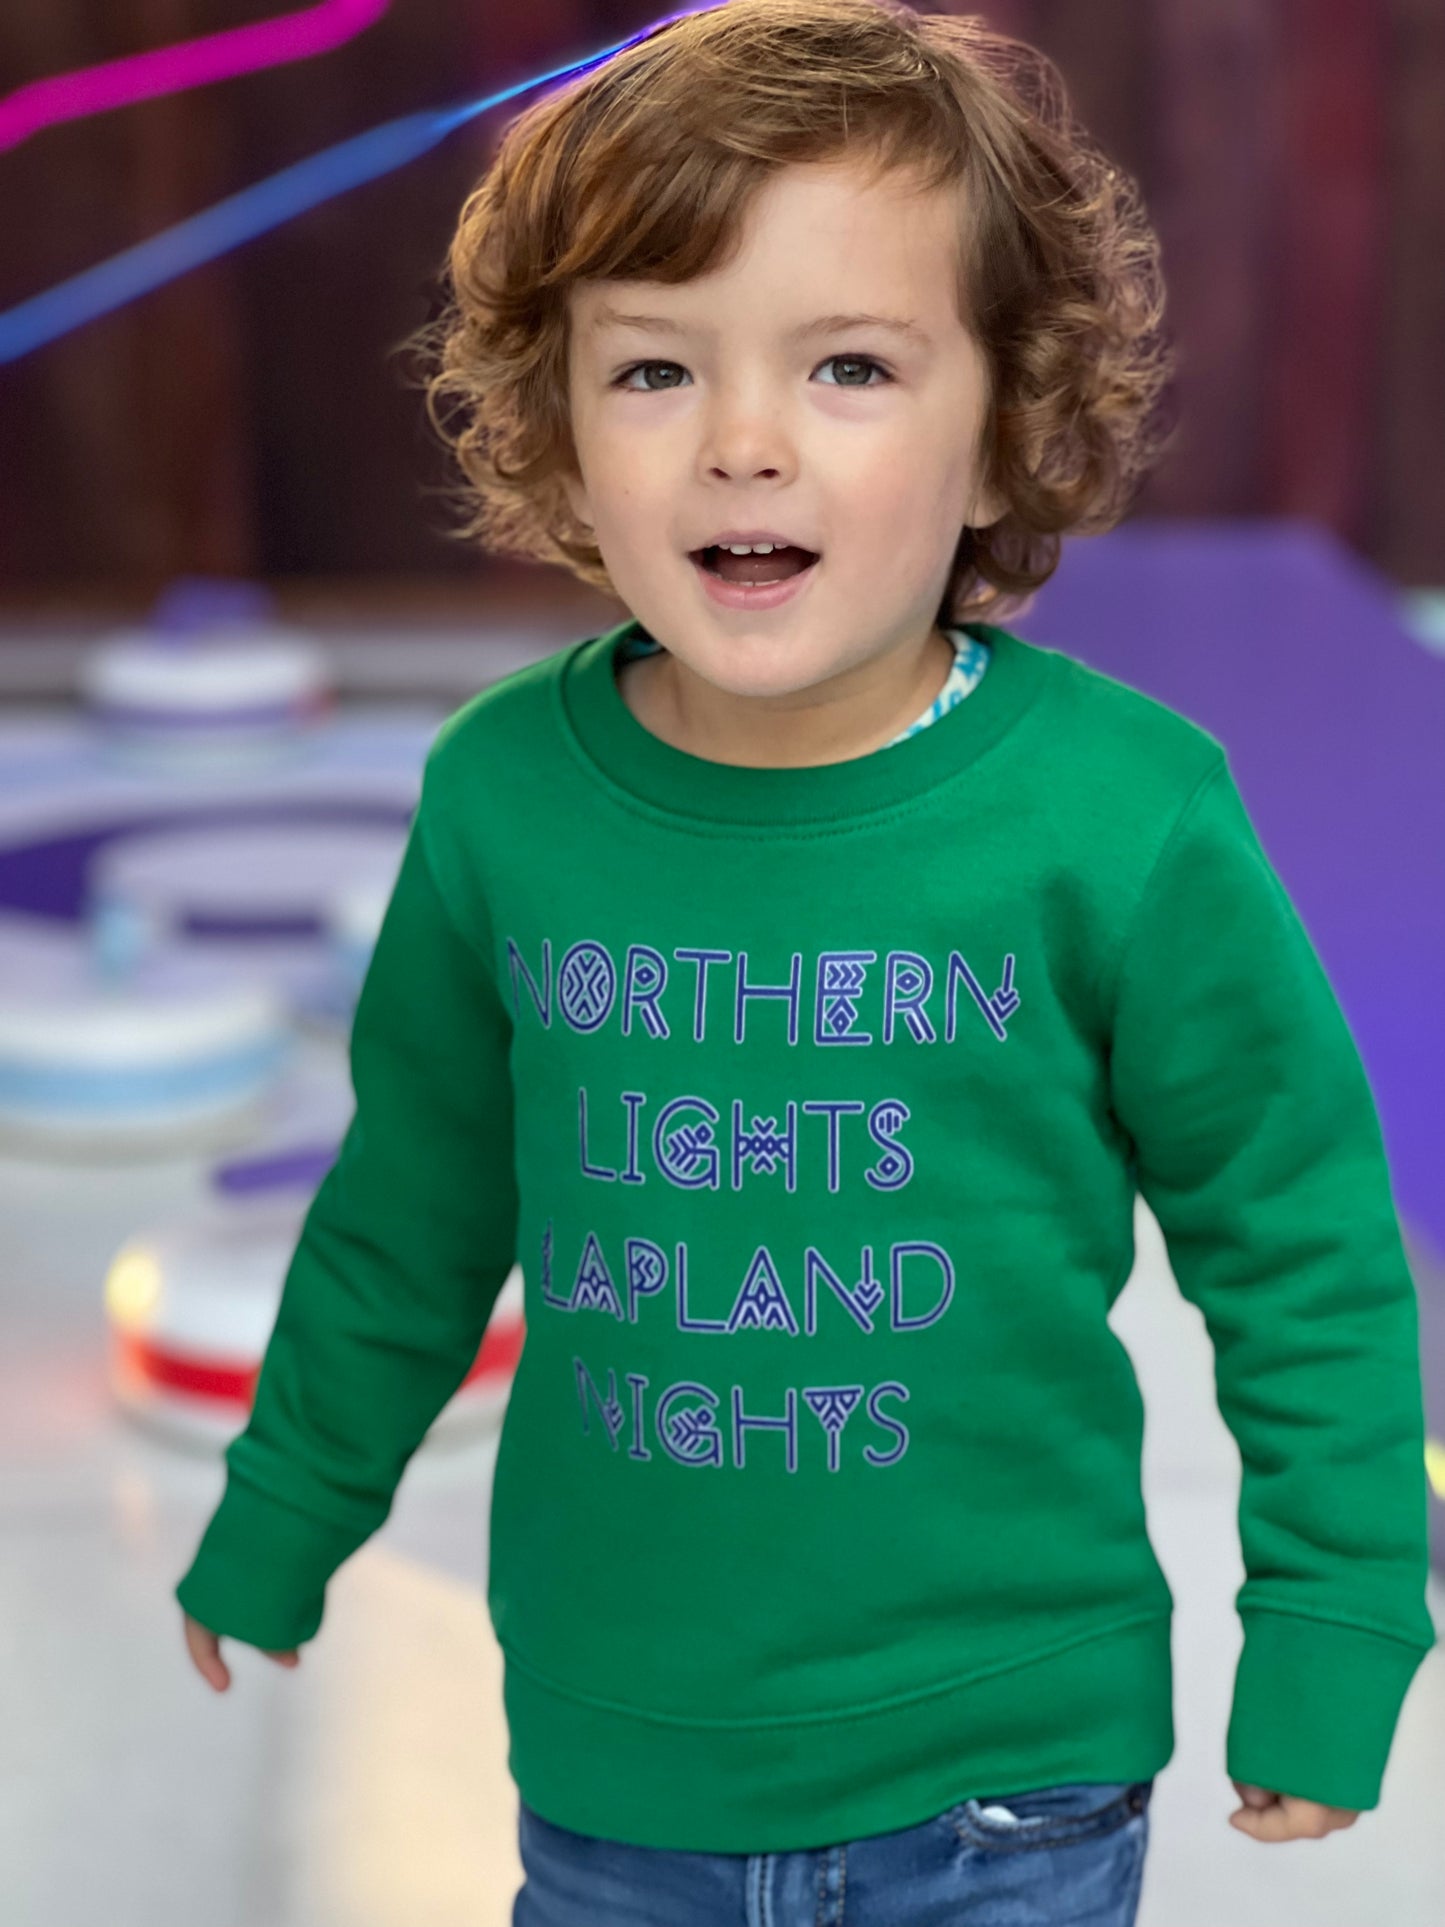 NORTHERN LIGHTS LAPLAND NIGHTS - Organic Cotton Kids Long Sleeve Sweatshirt